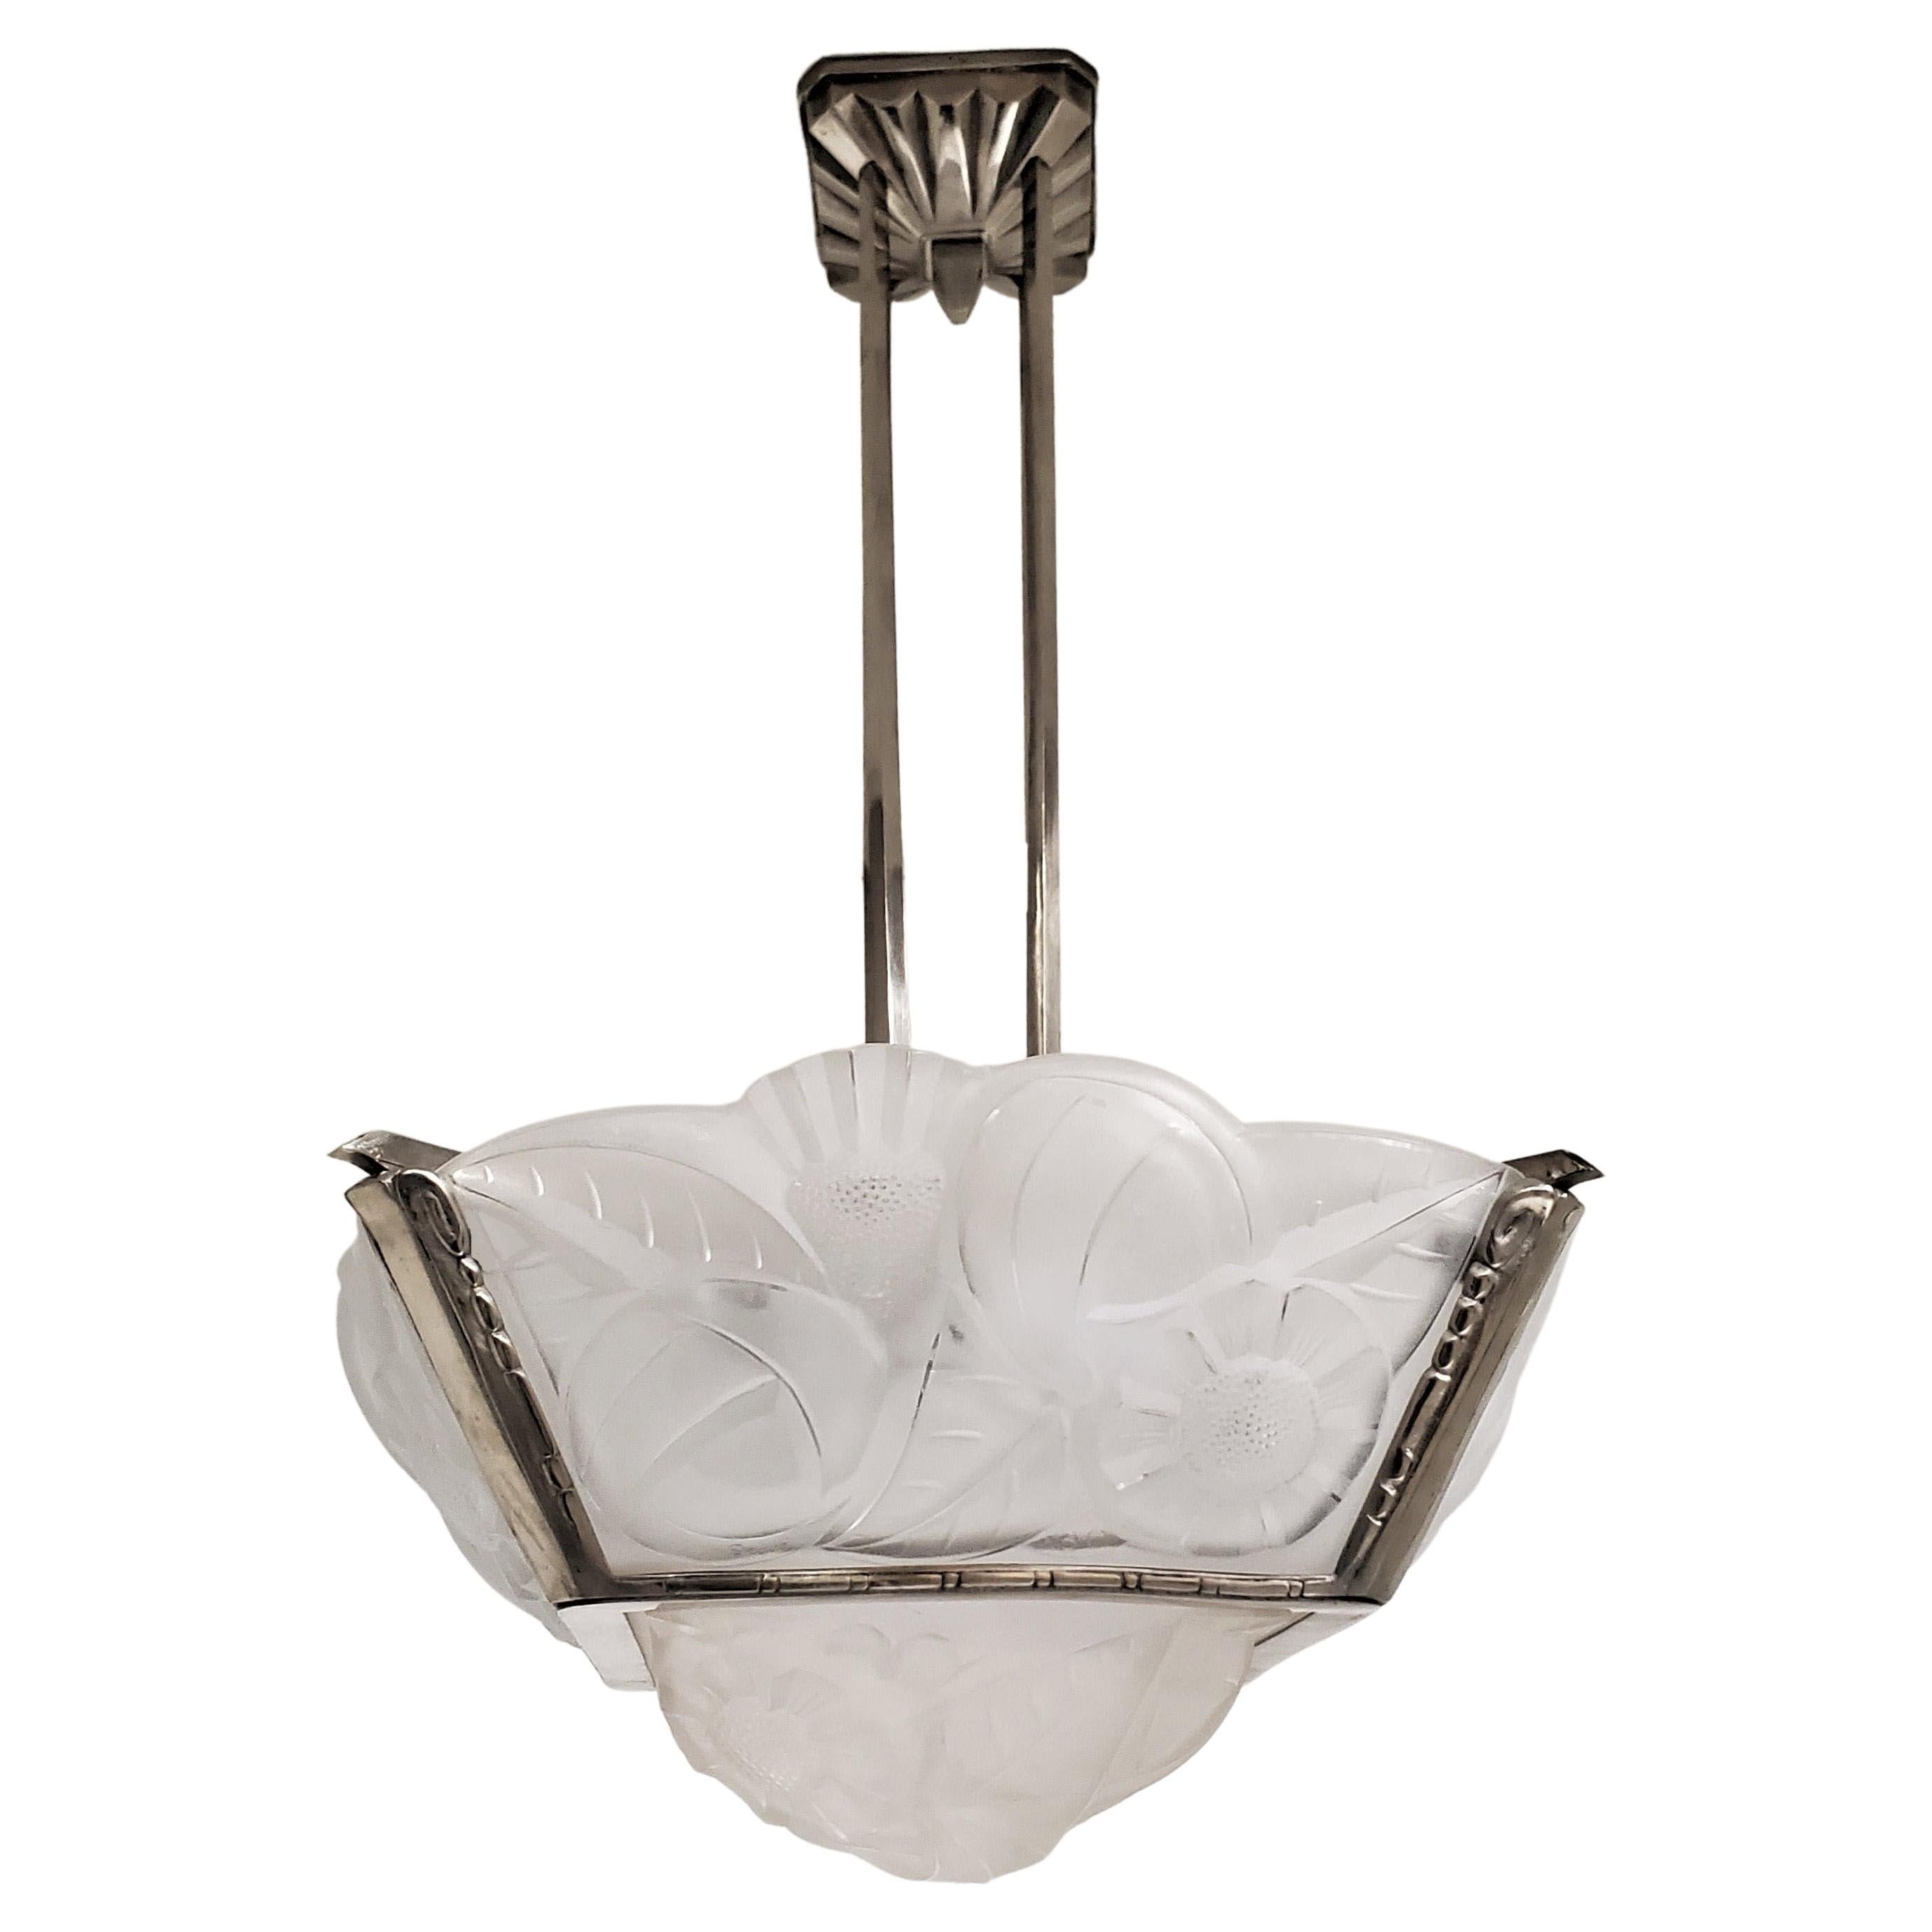 2 Art Deco art frosted glass chandelier tulips octagonal shape for original decoration